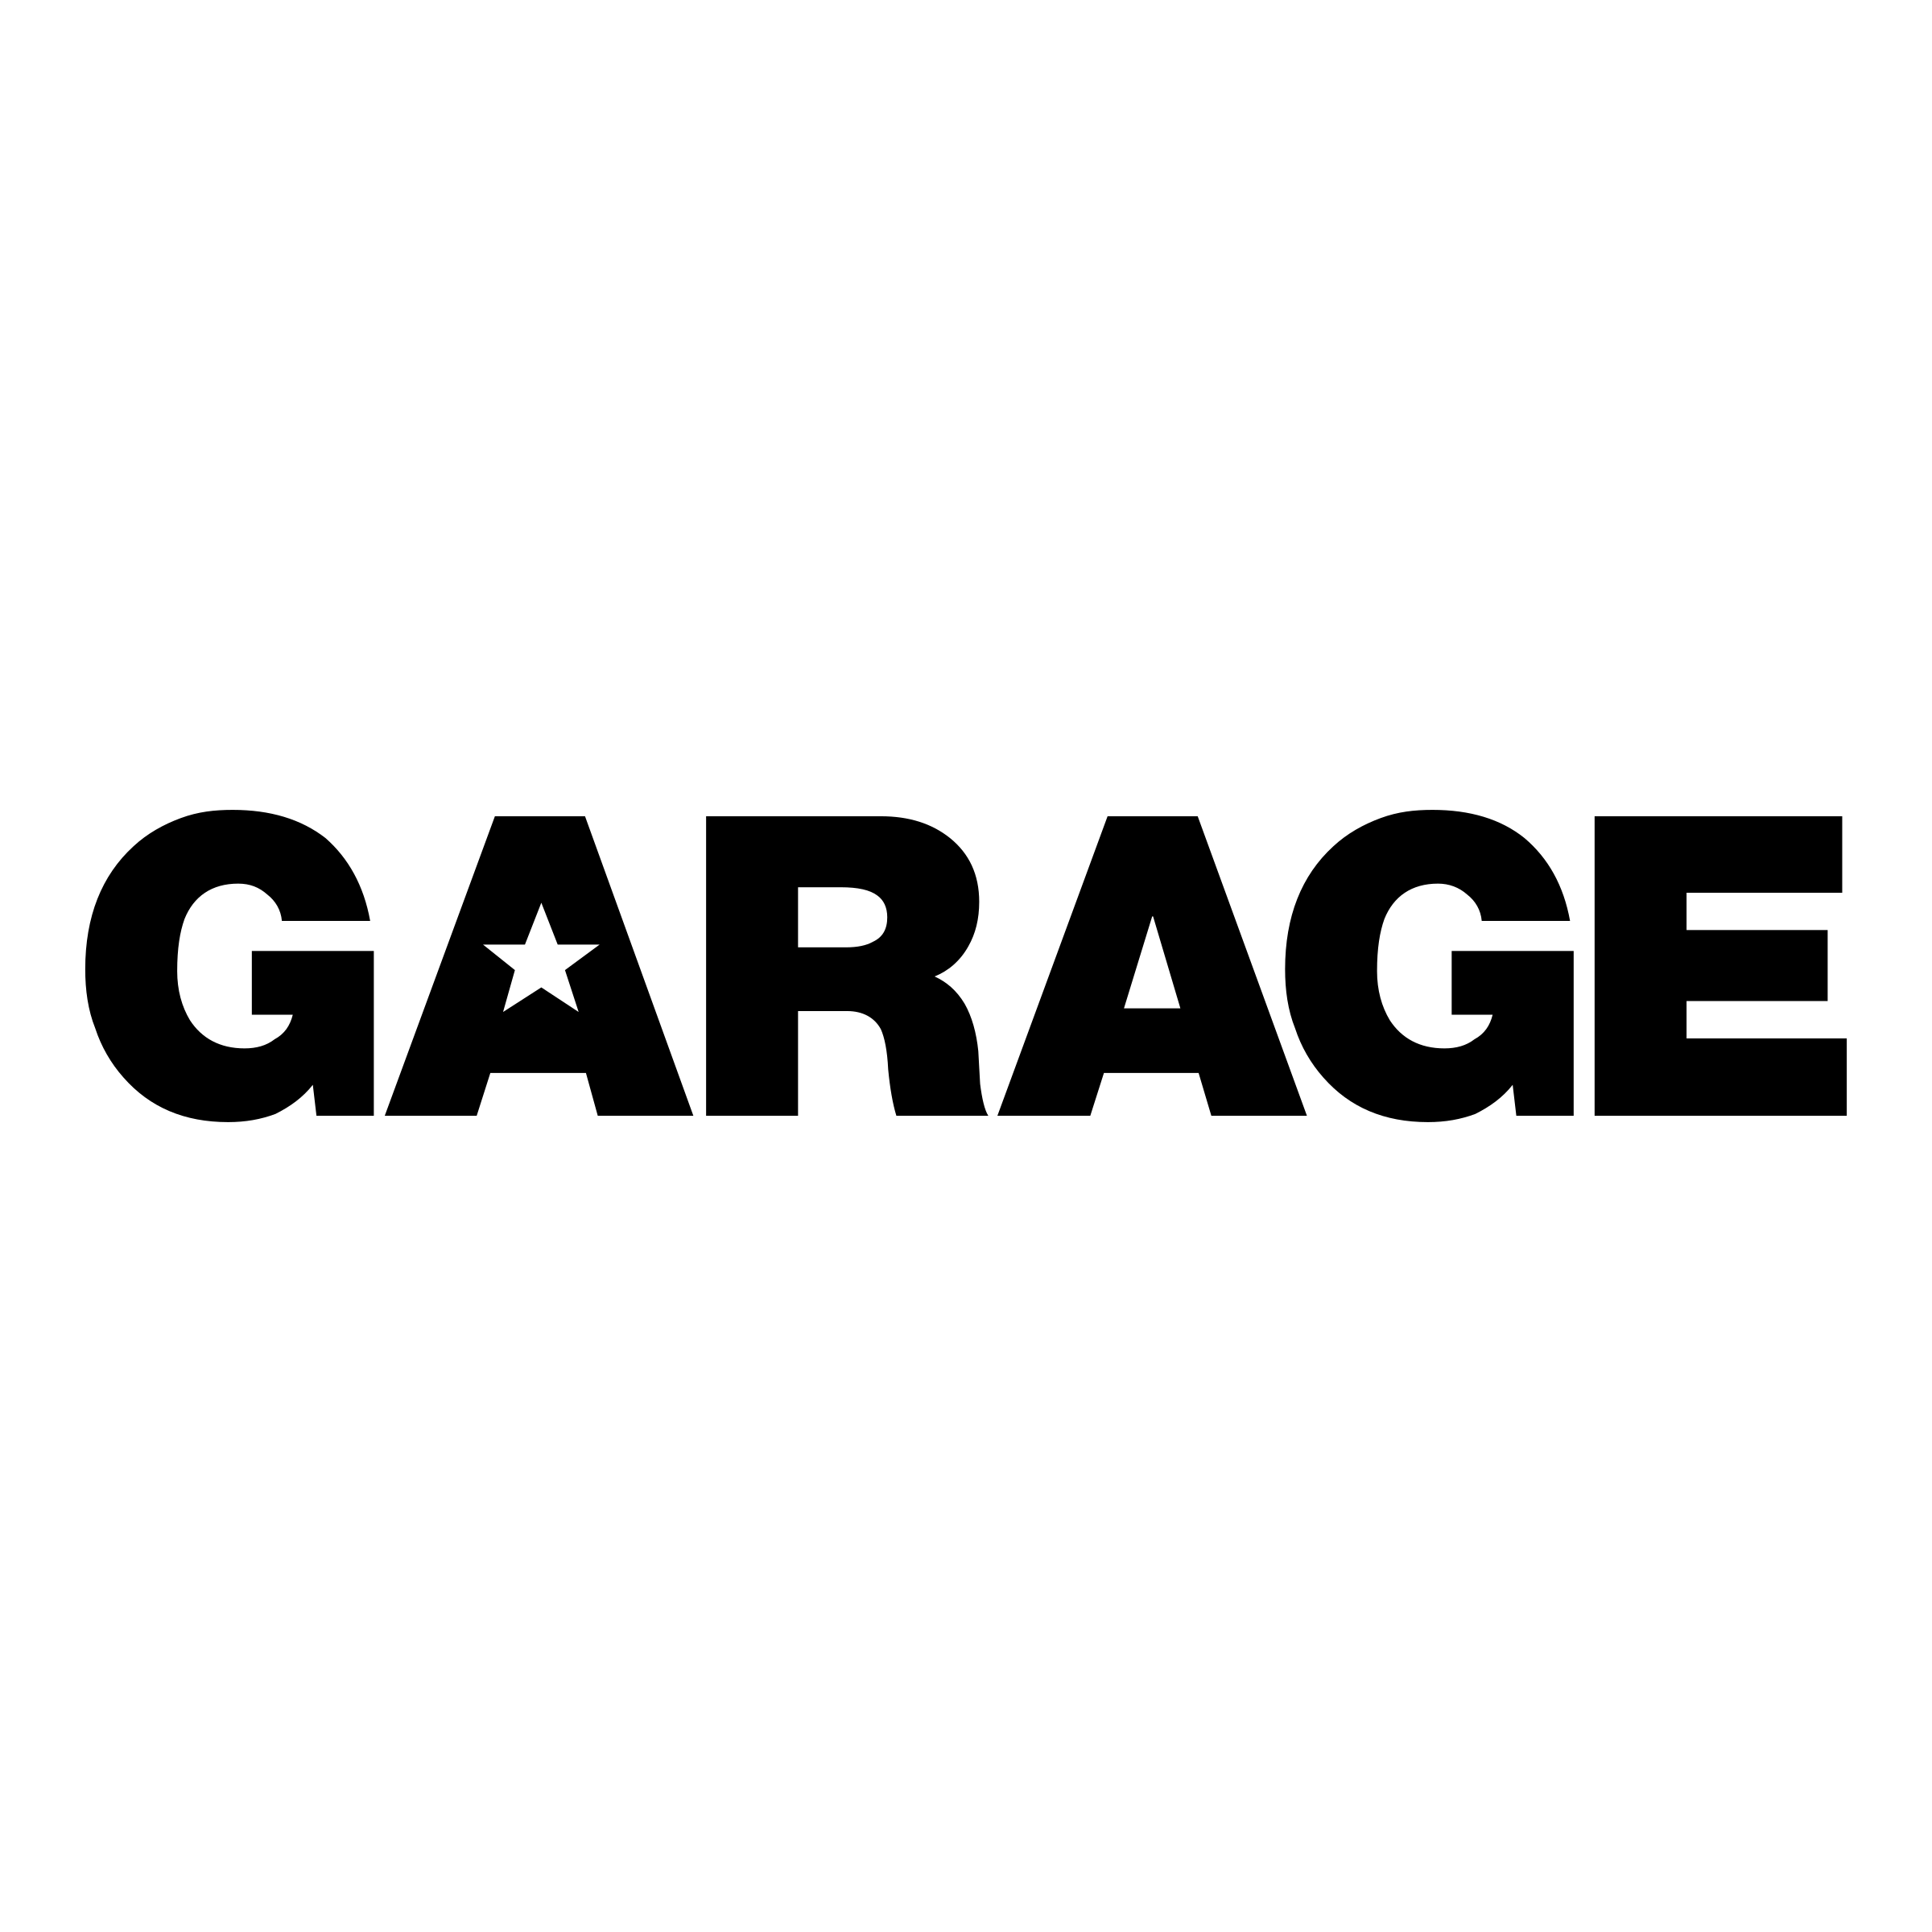 Garage Logo - Garage Logo PNG Transparent & SVG Vector - Freebie Supply